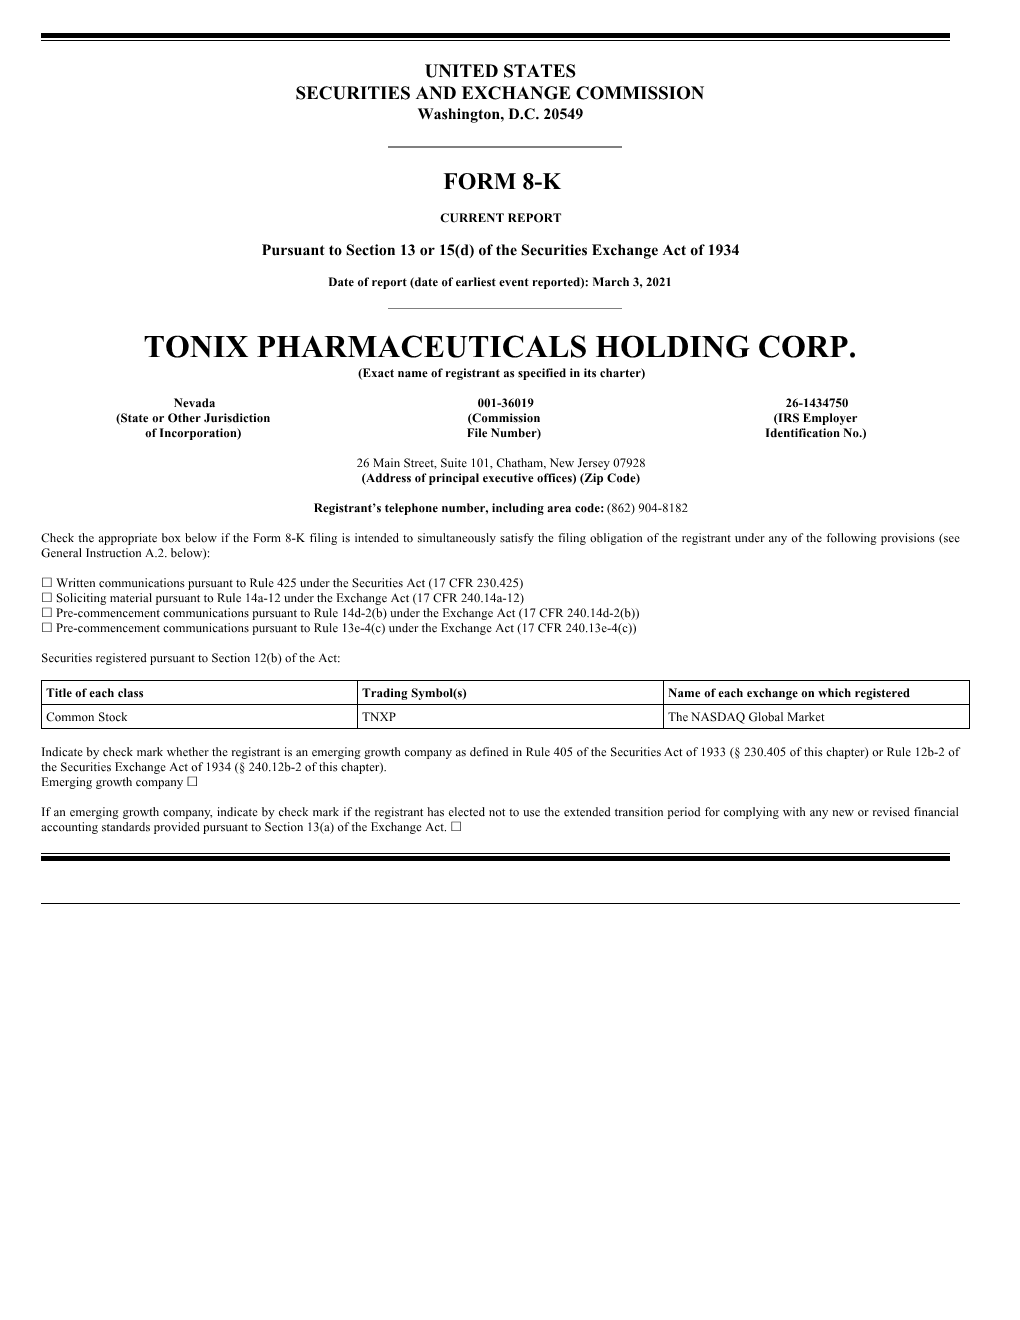 Tonix Pharmaceuticals Holding Corp. (TNXP)